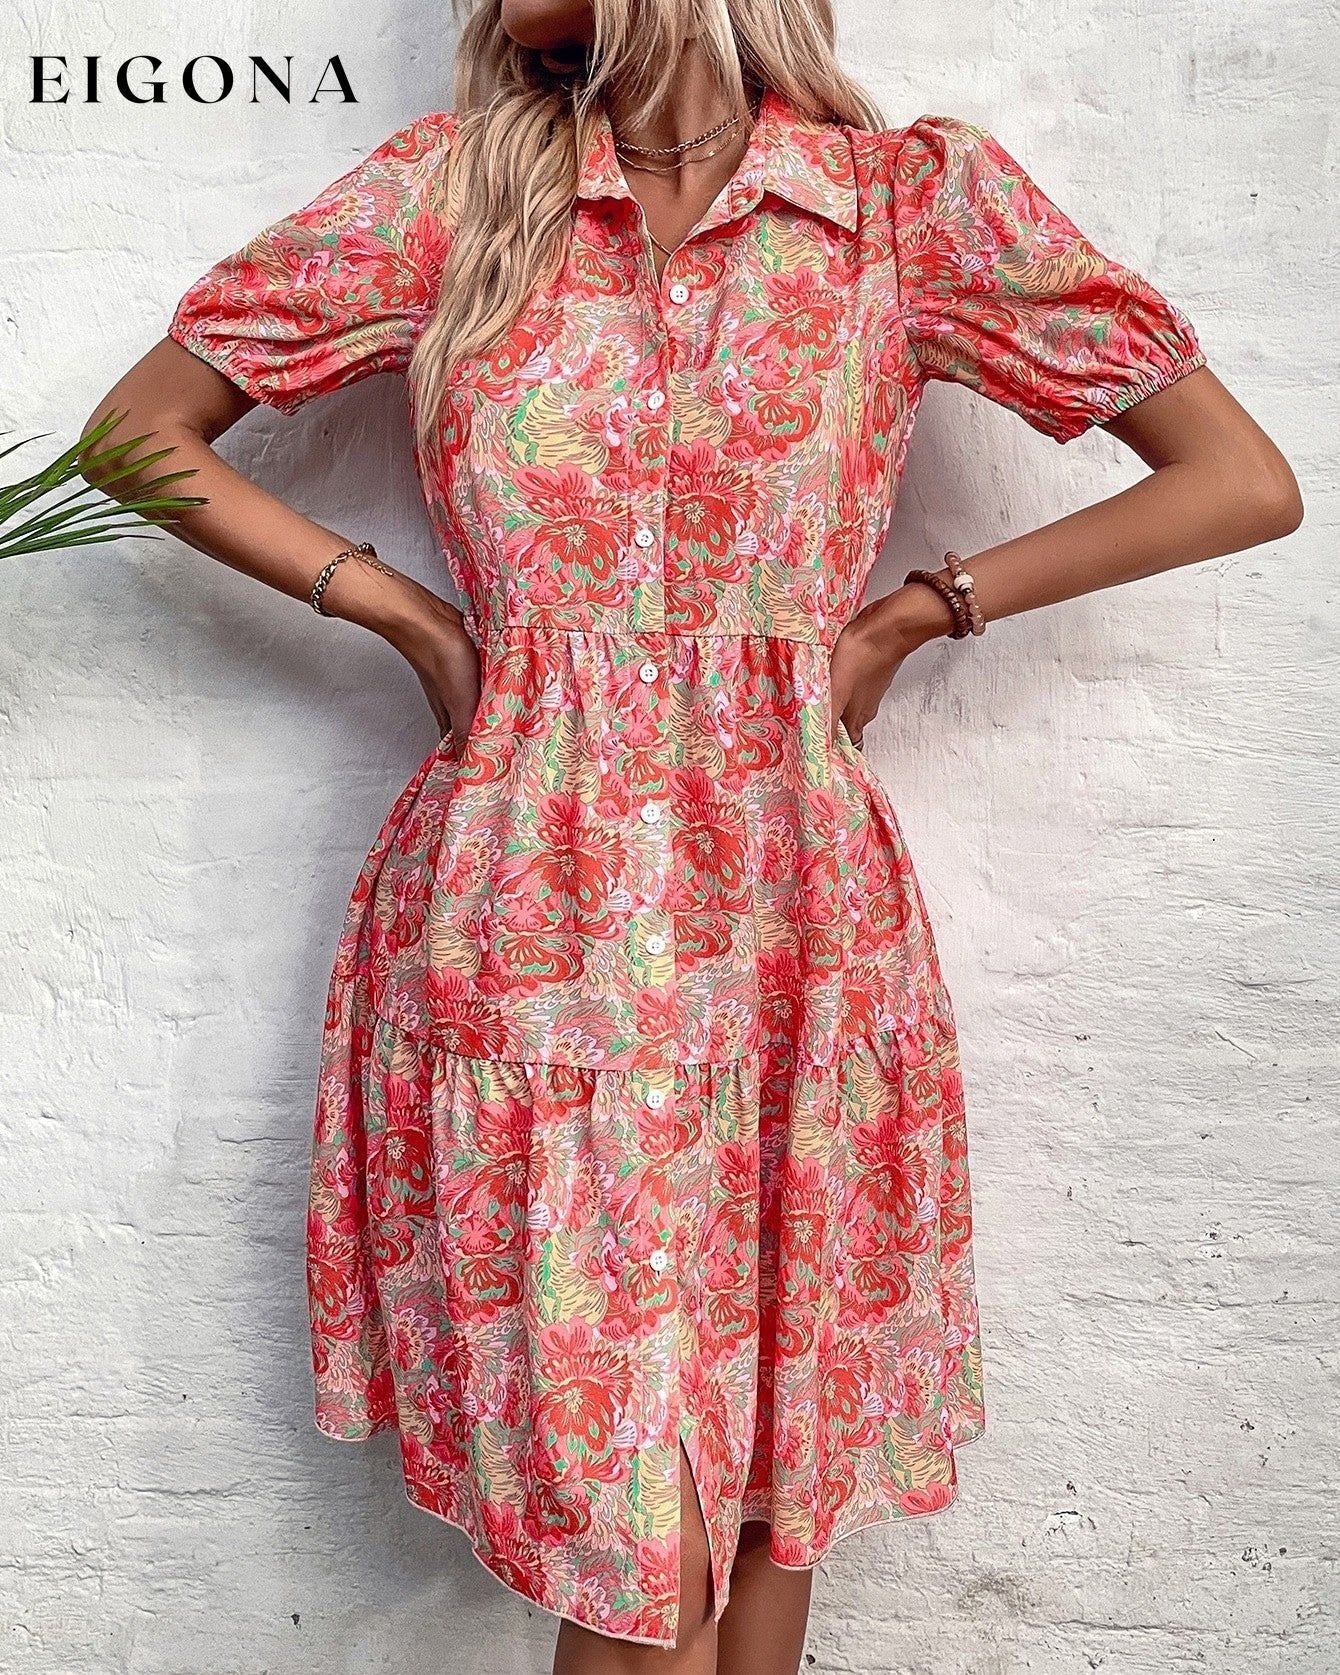 Floral Print Short Sleeve Dress Casual Dresses Clothes Dresses SALE Spring Summer